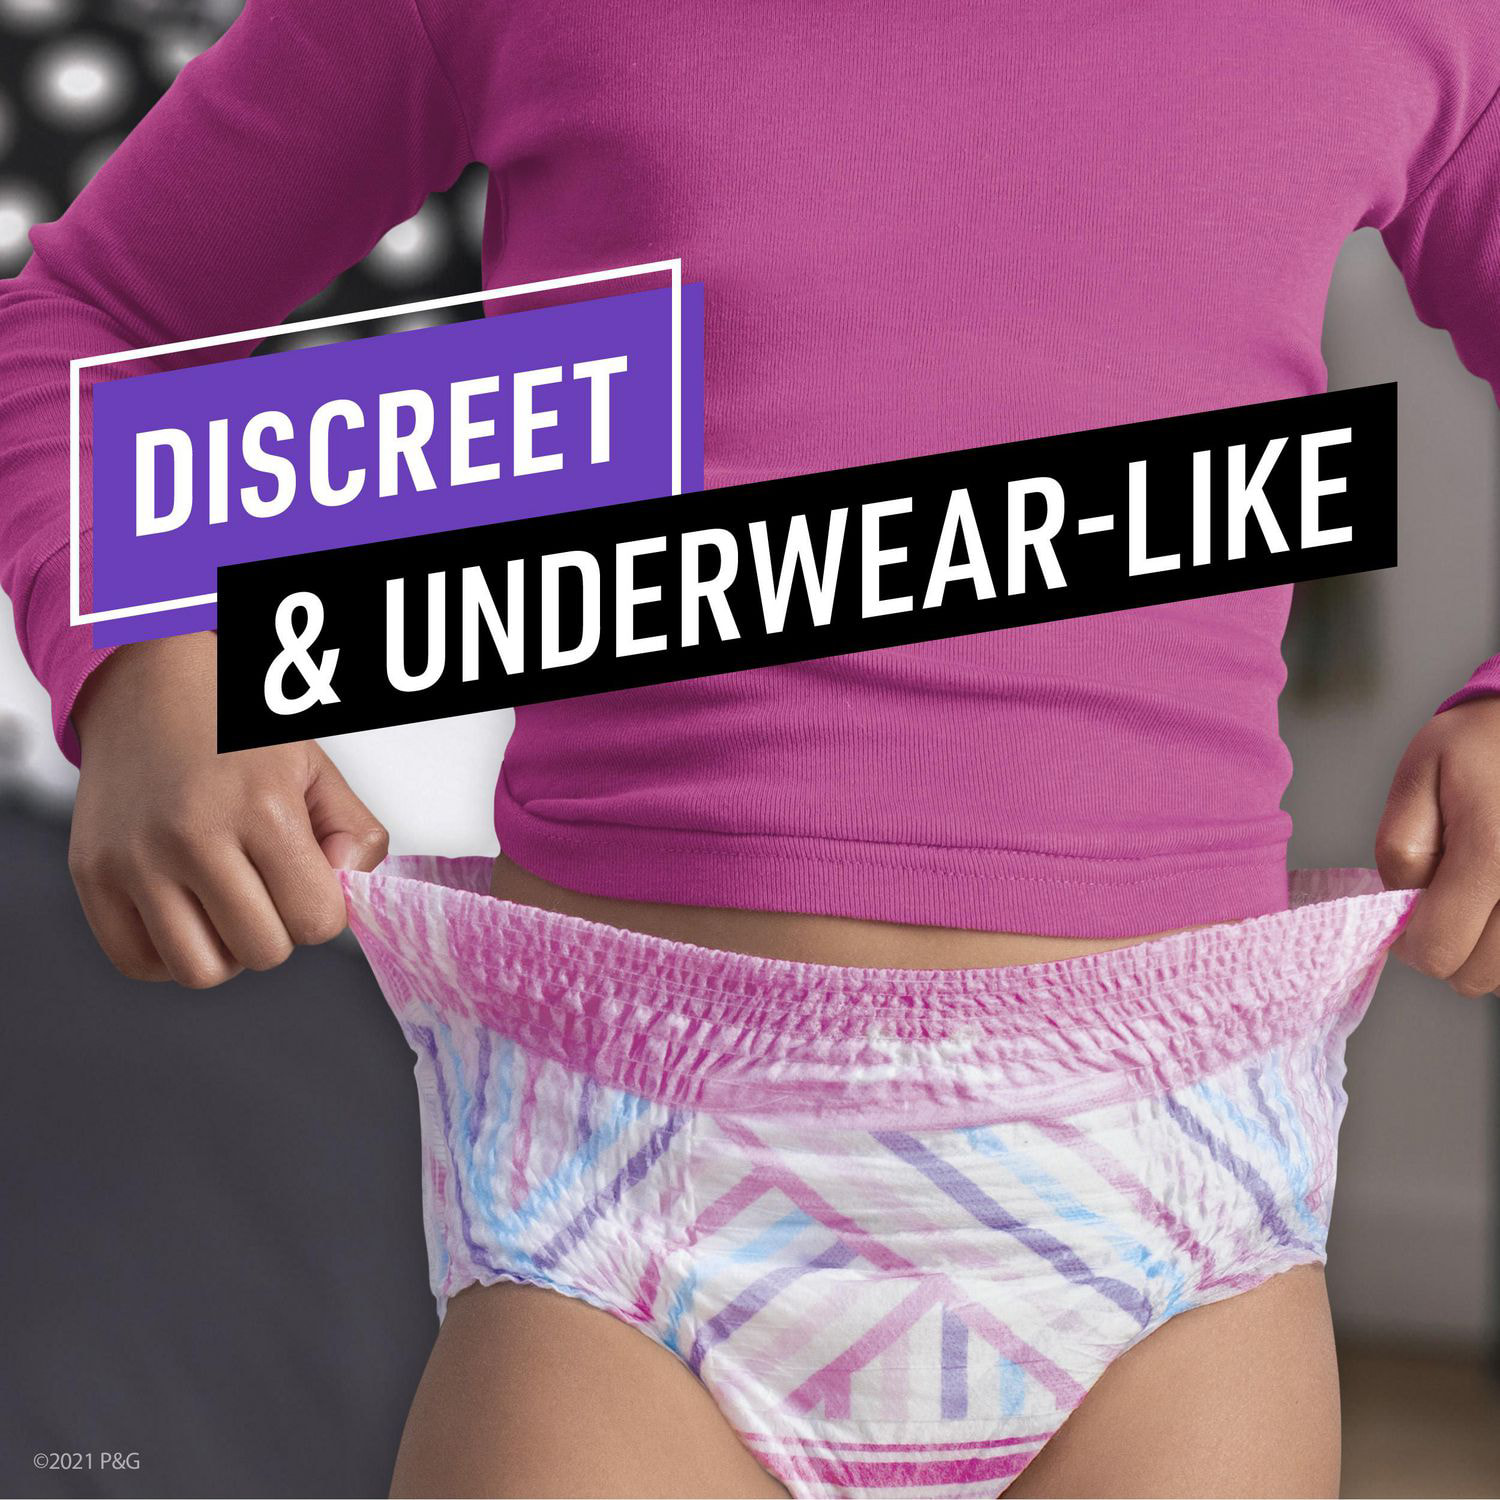 Ninjamas Nighttime Bedwetting Underwear Girl, Sizes S/M - L/XL, 34-44 Count